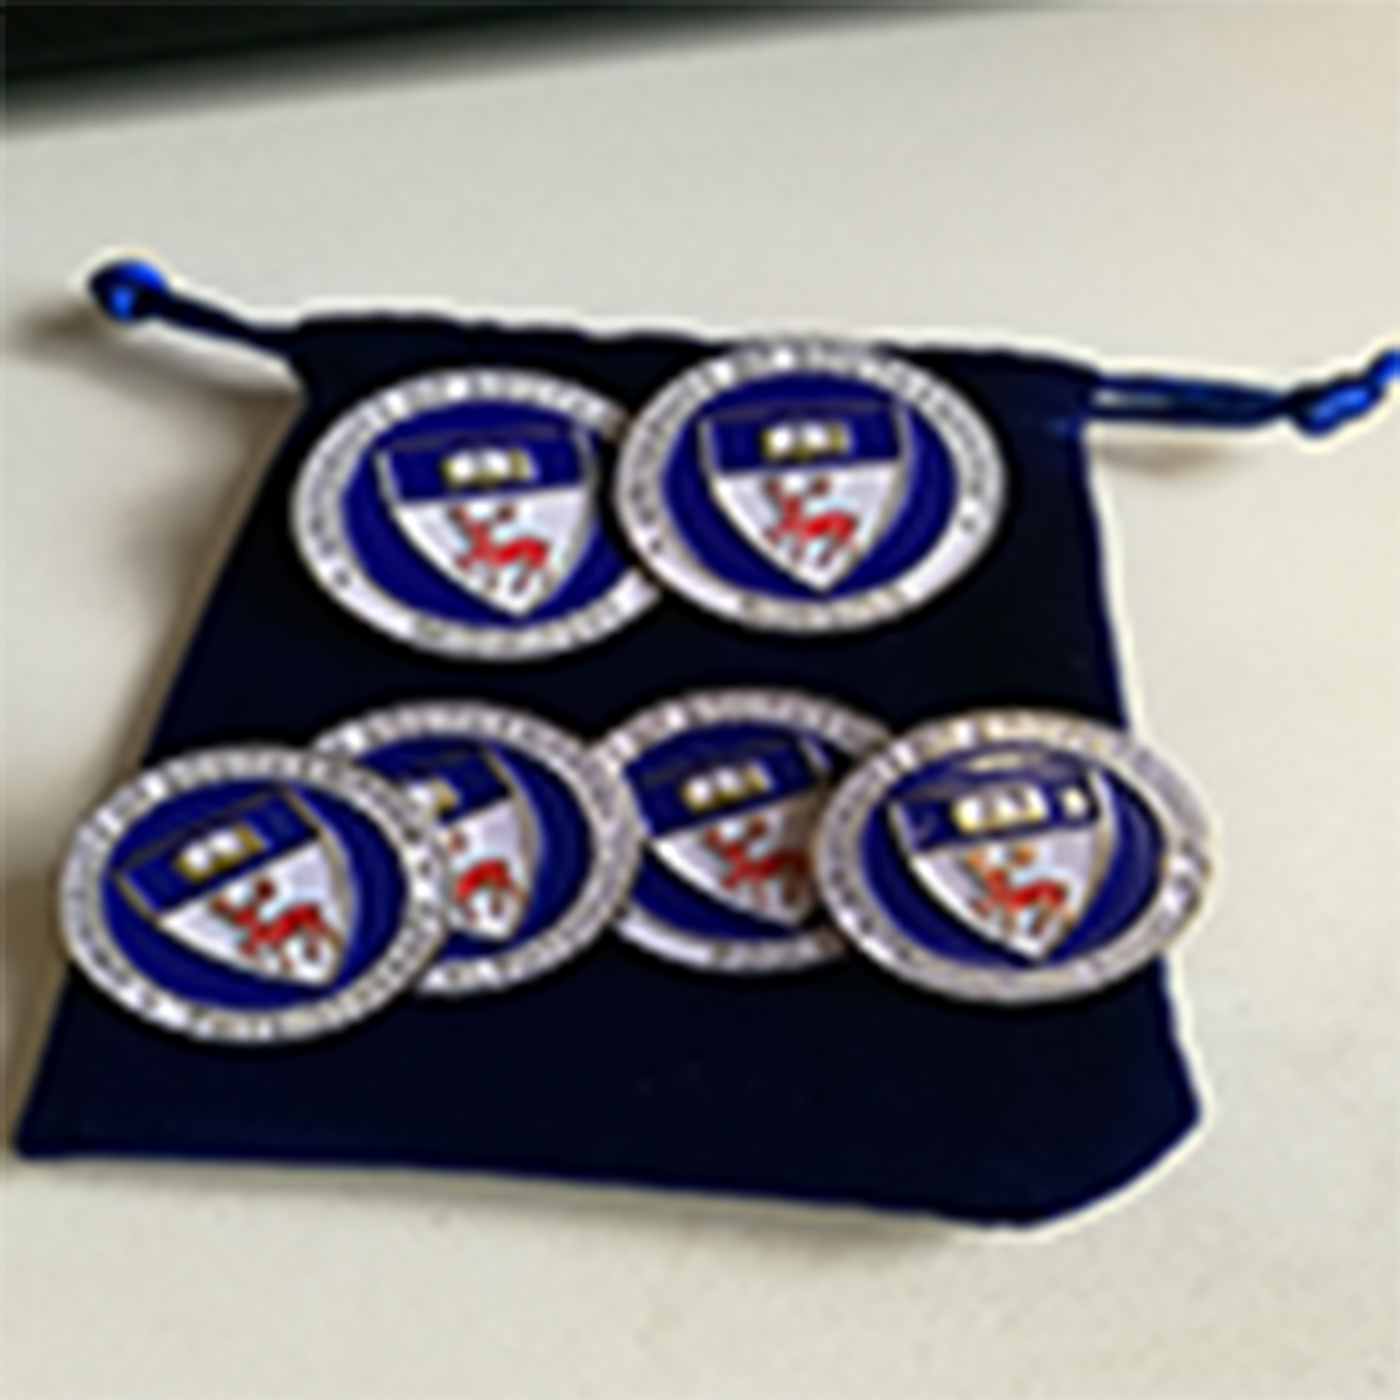 Image of badges